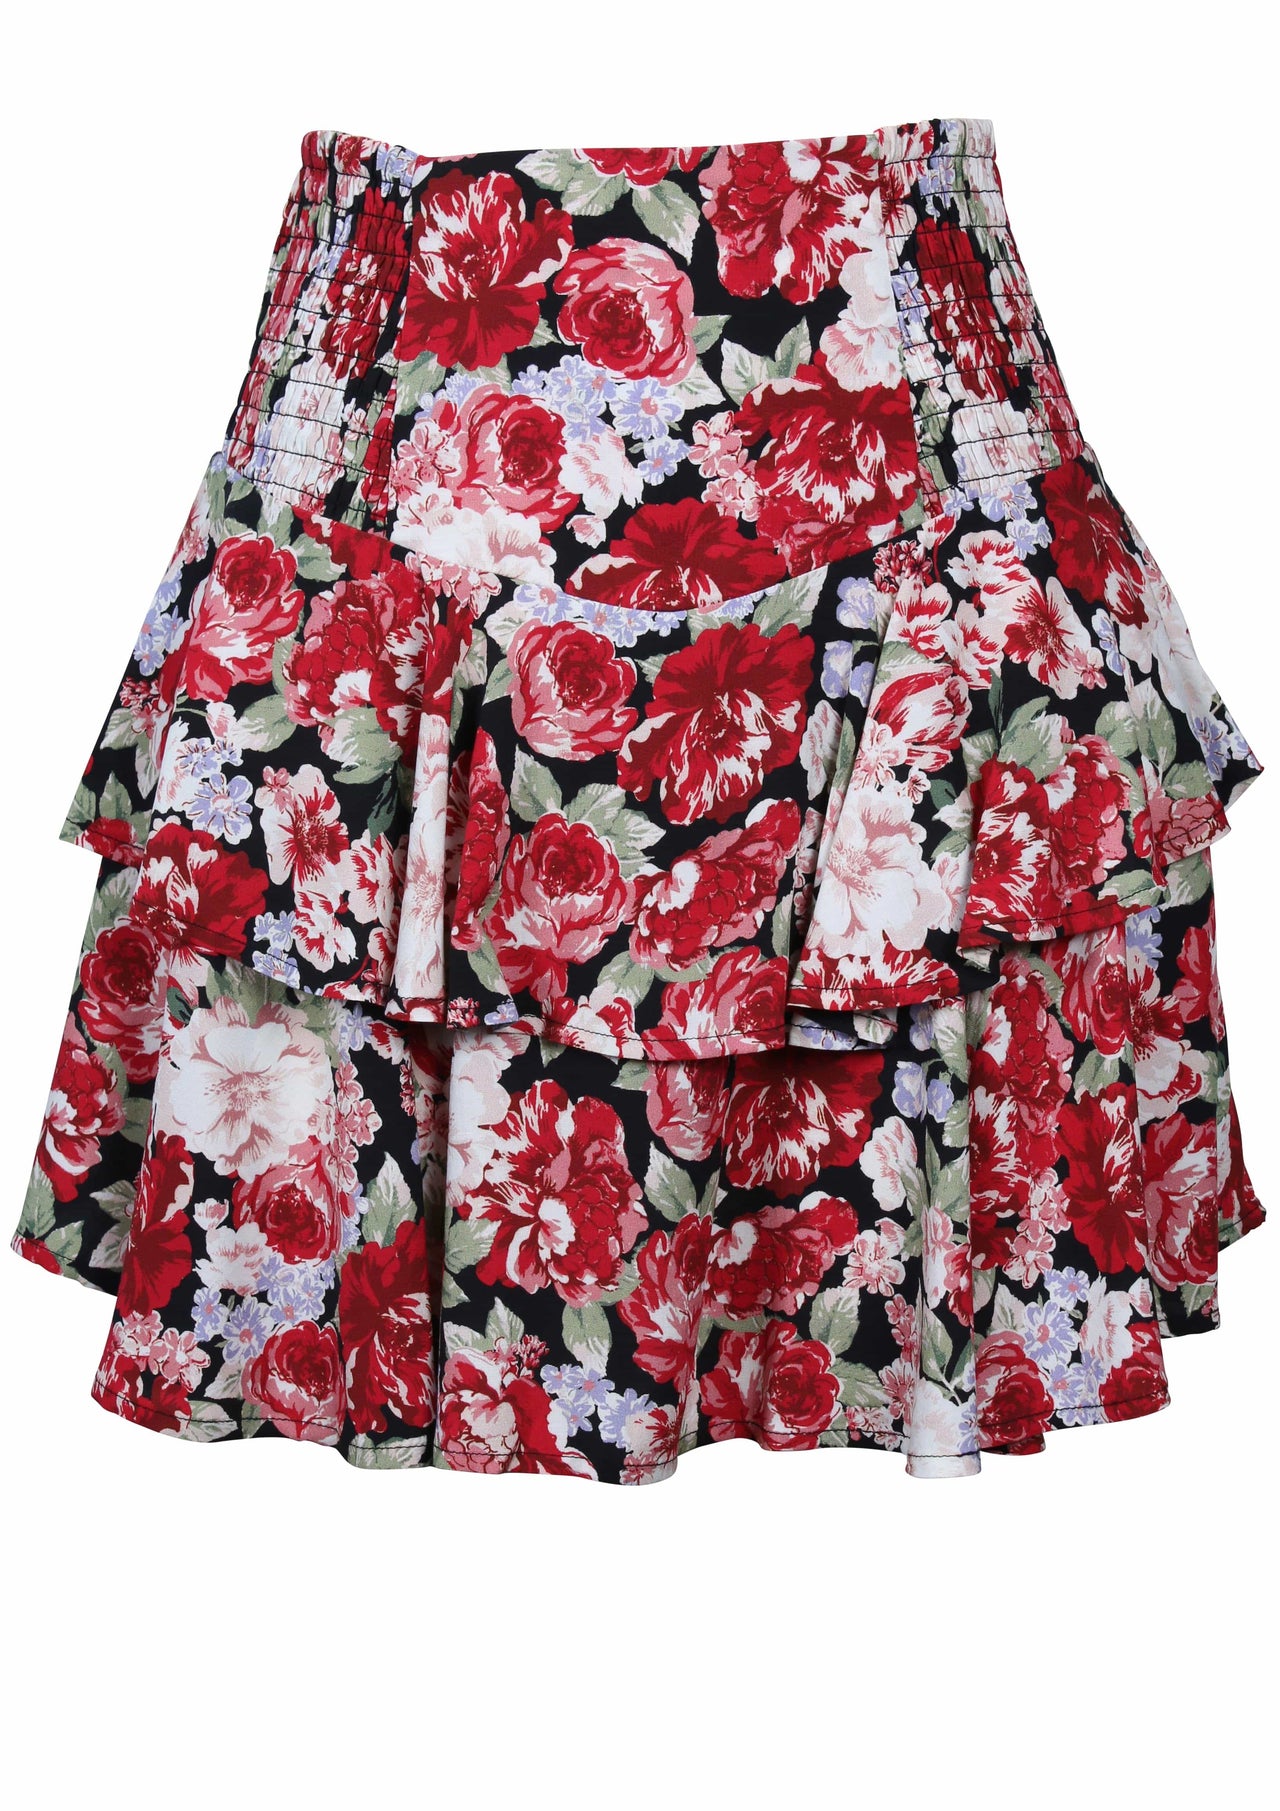 Kind Words Mini Skirt Multi, Mini Skirt by Mink Pink | LIT Boutique